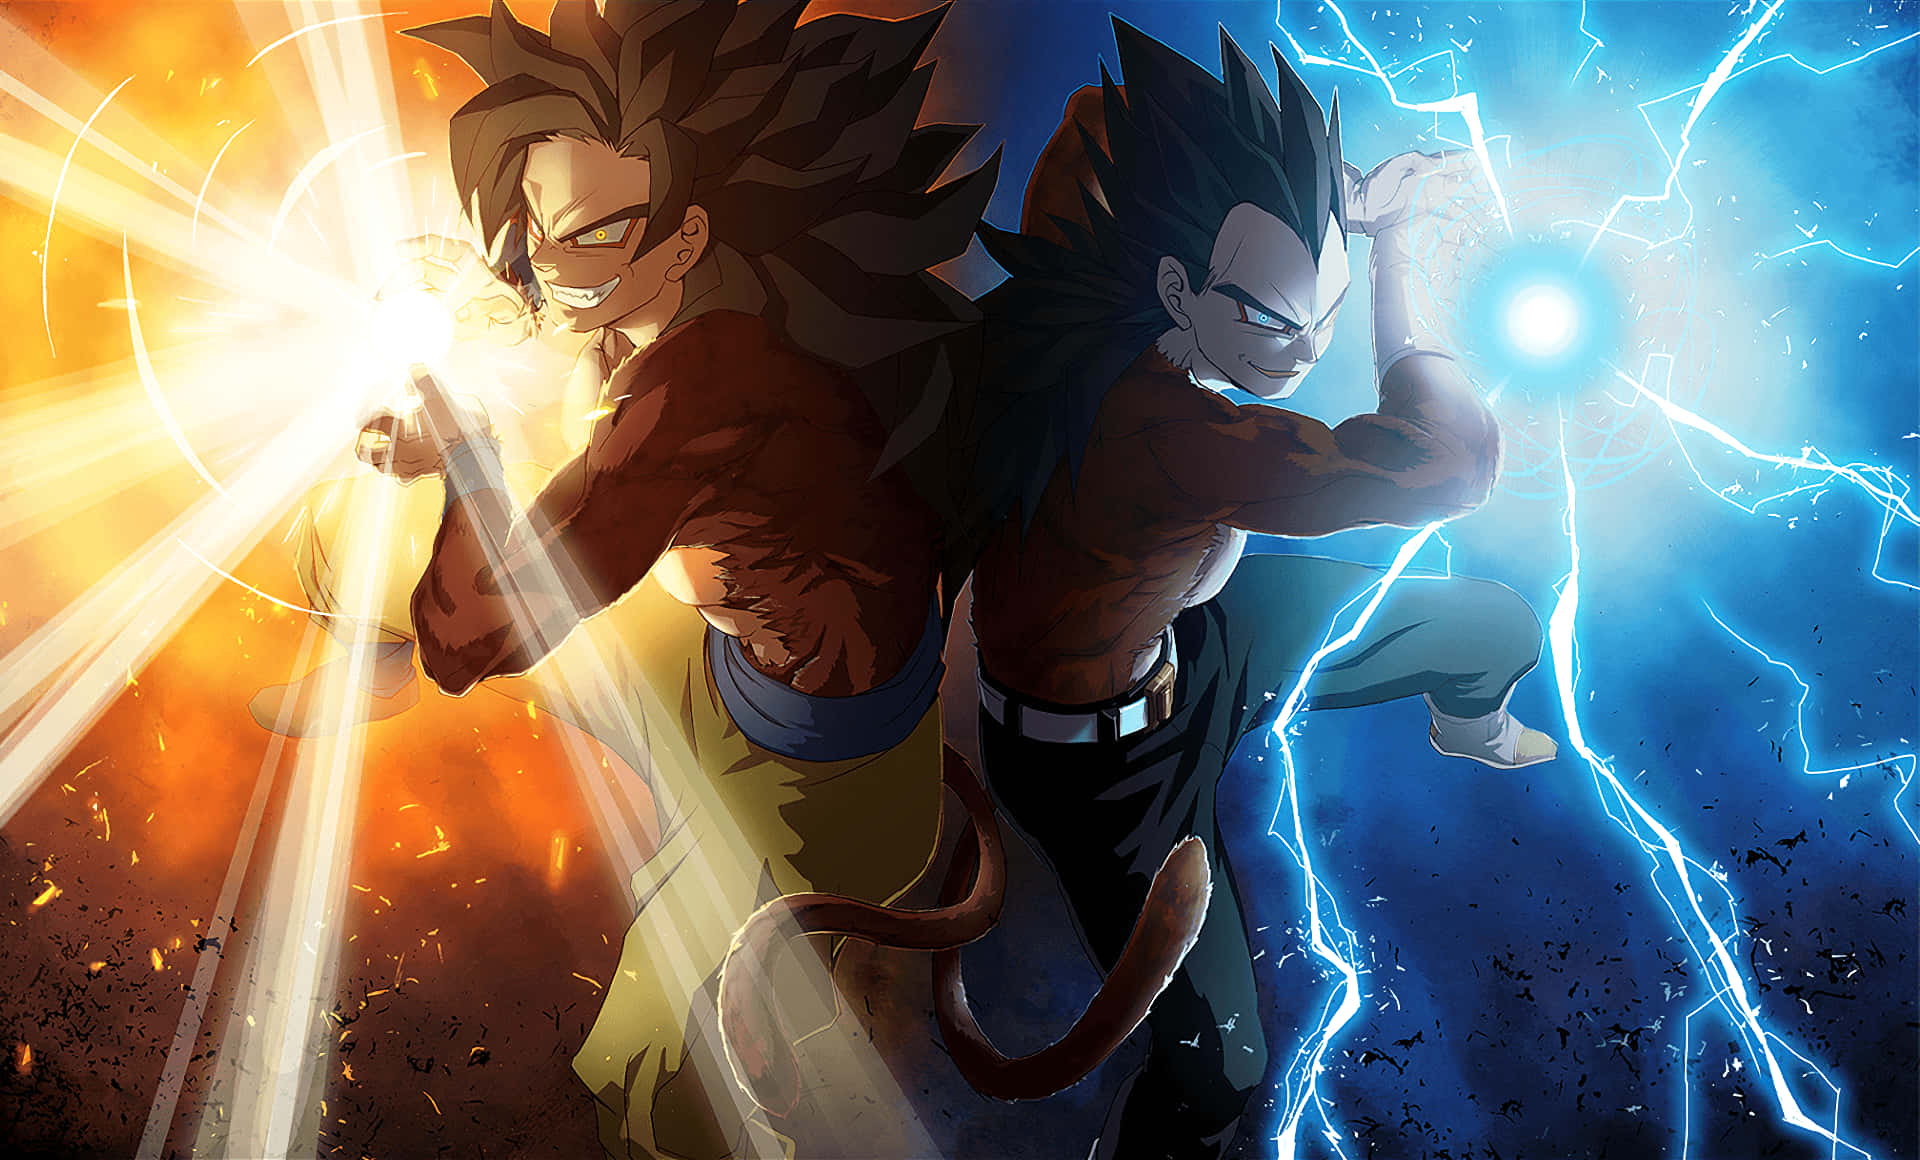 Imagende Goku Y Vegeta En Super Saiyan 4.